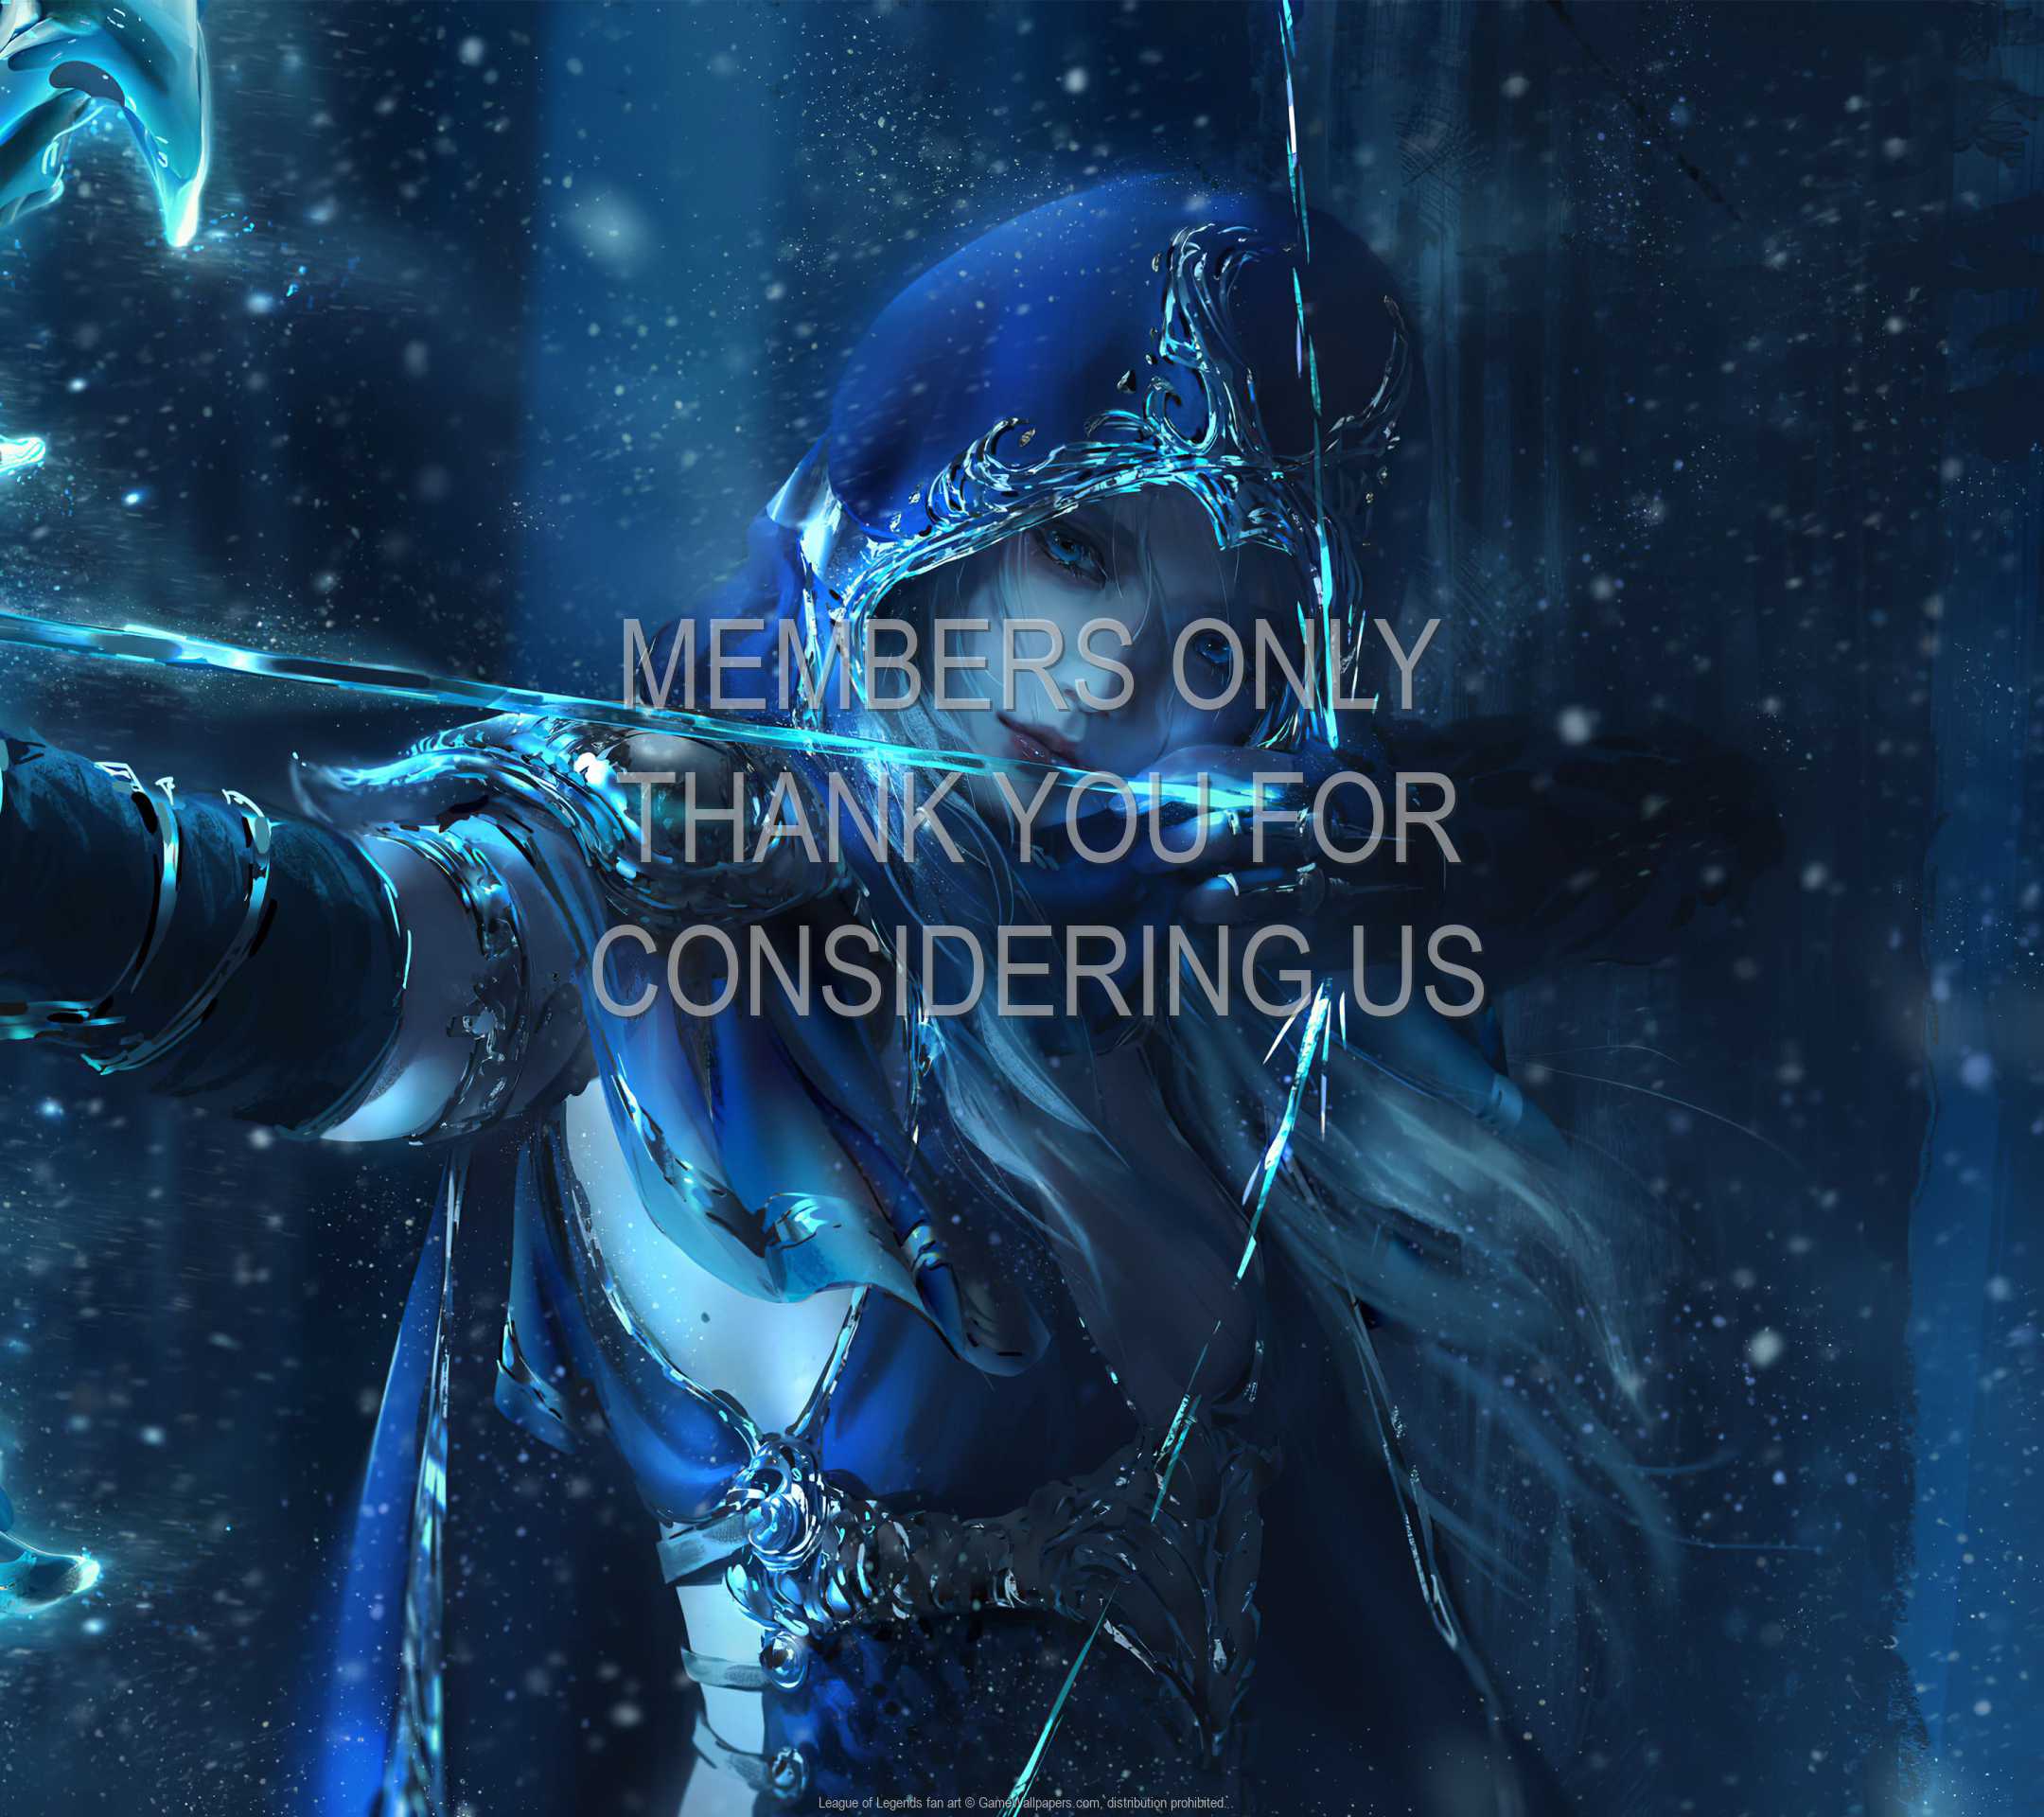 League of Legends fan art 1080p Horizontal Mobile wallpaper or background 15